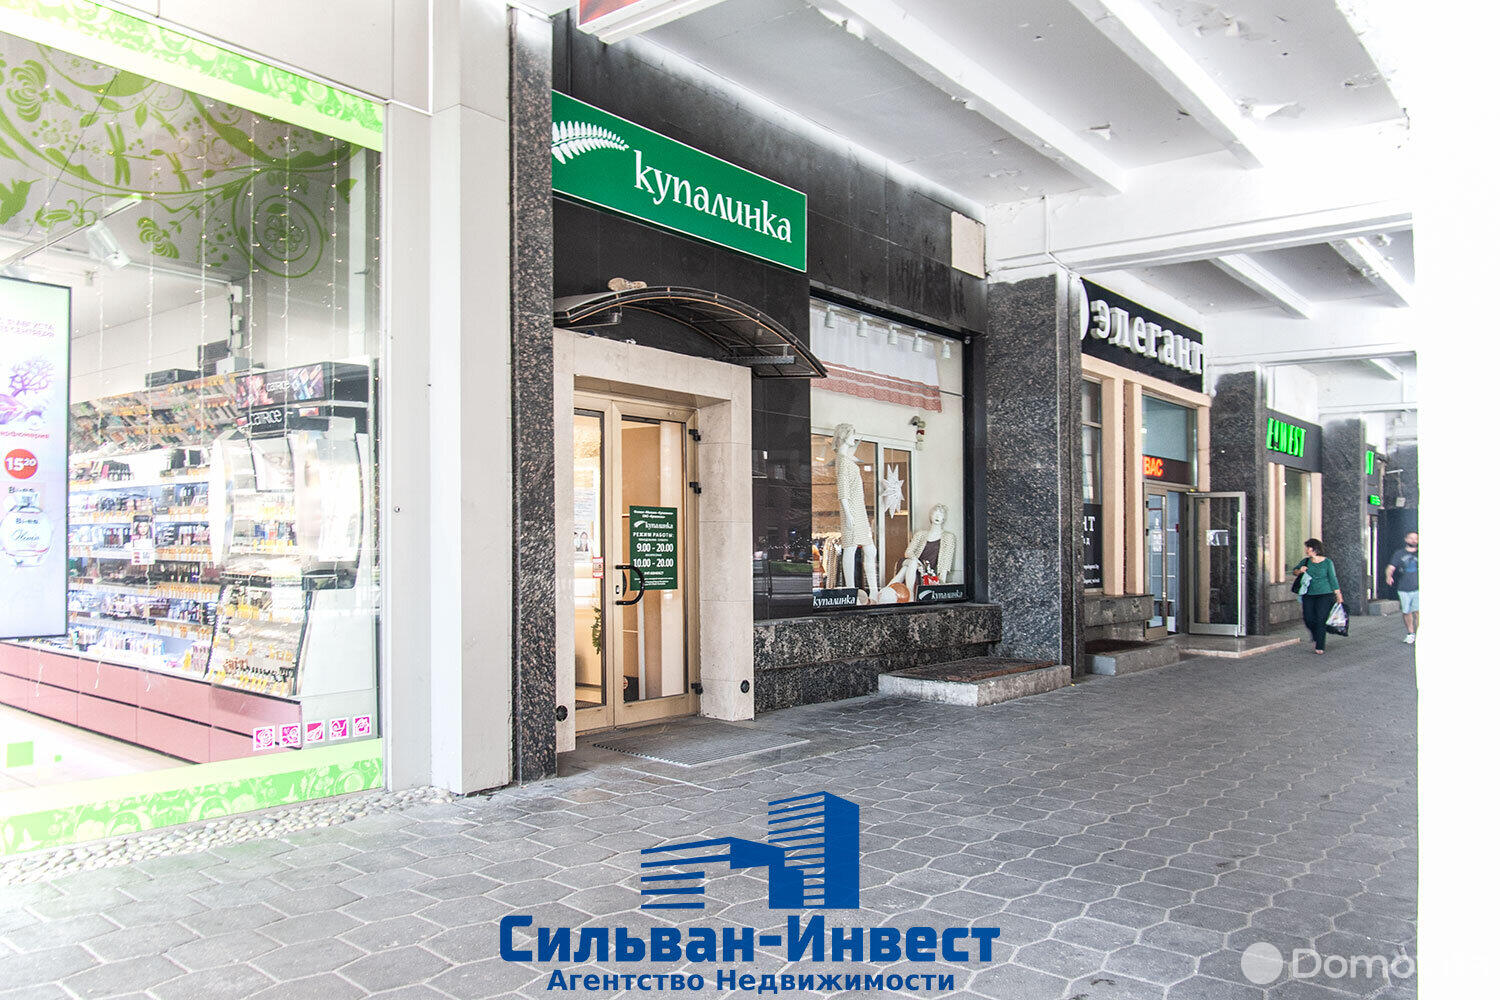 Аренда торговой точки на ул. Немига, д. 12/А в Минске, 5025EUR, код 964415 - фото 6